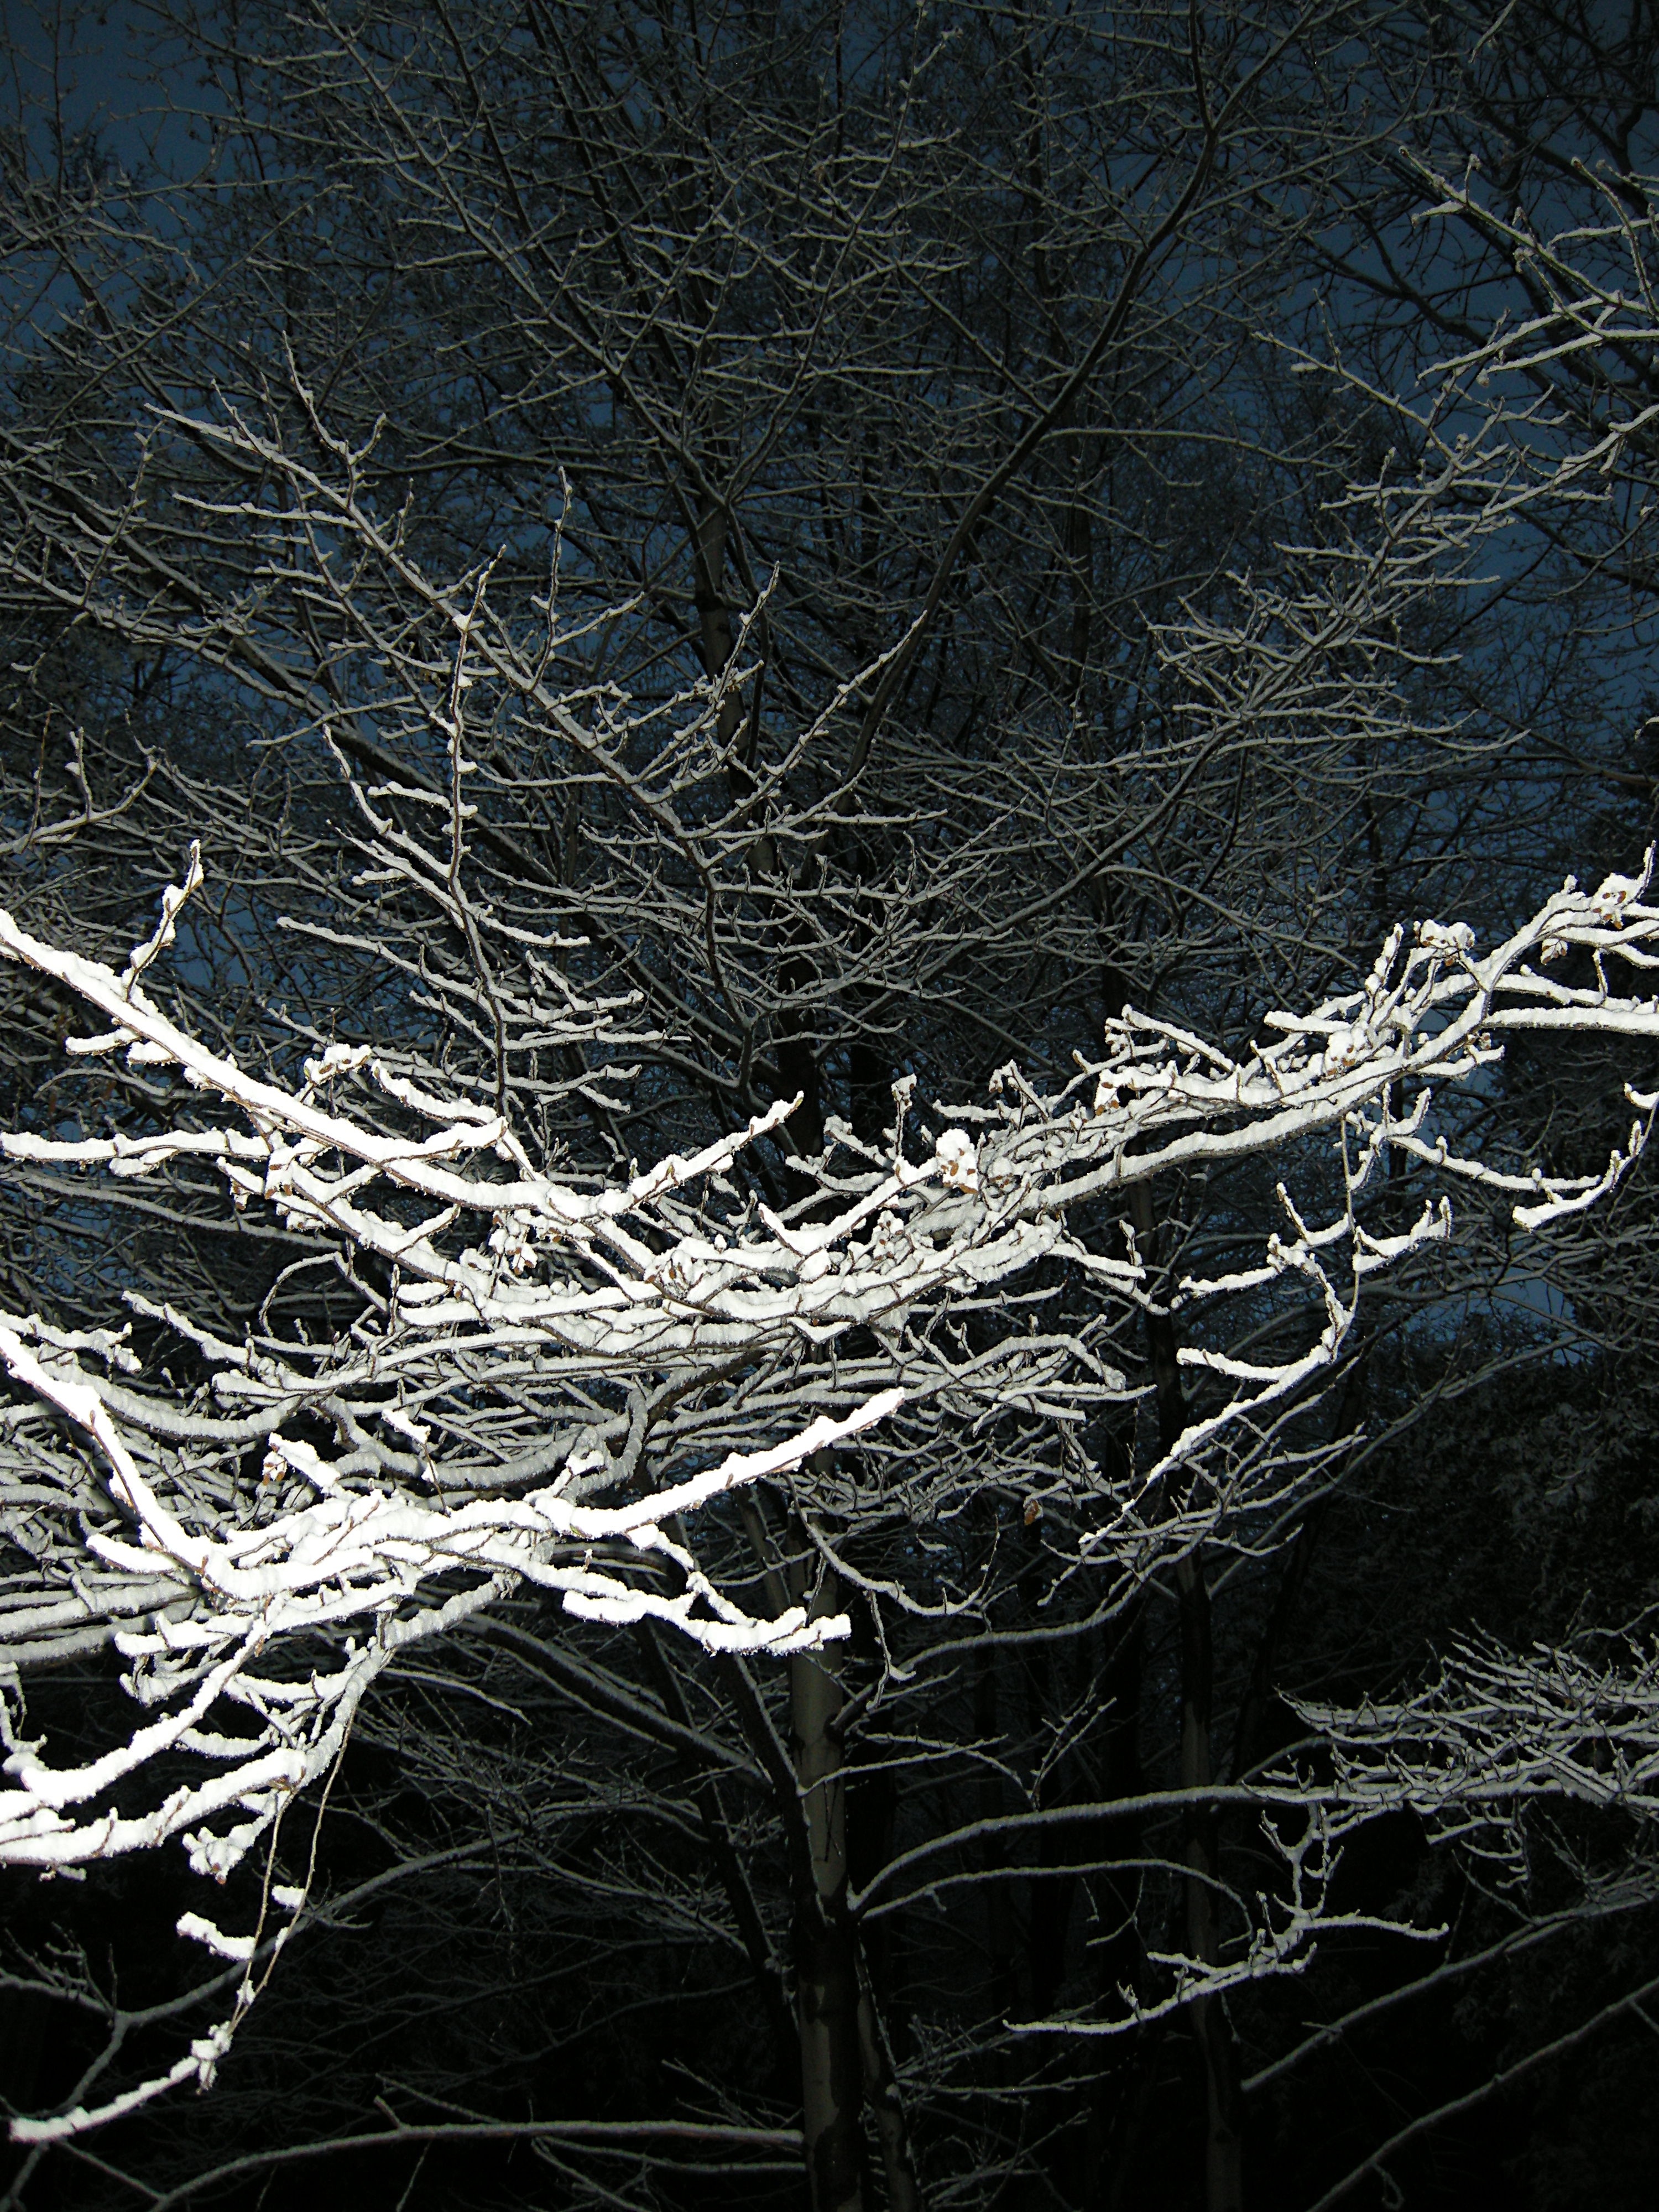 Snow on Branch